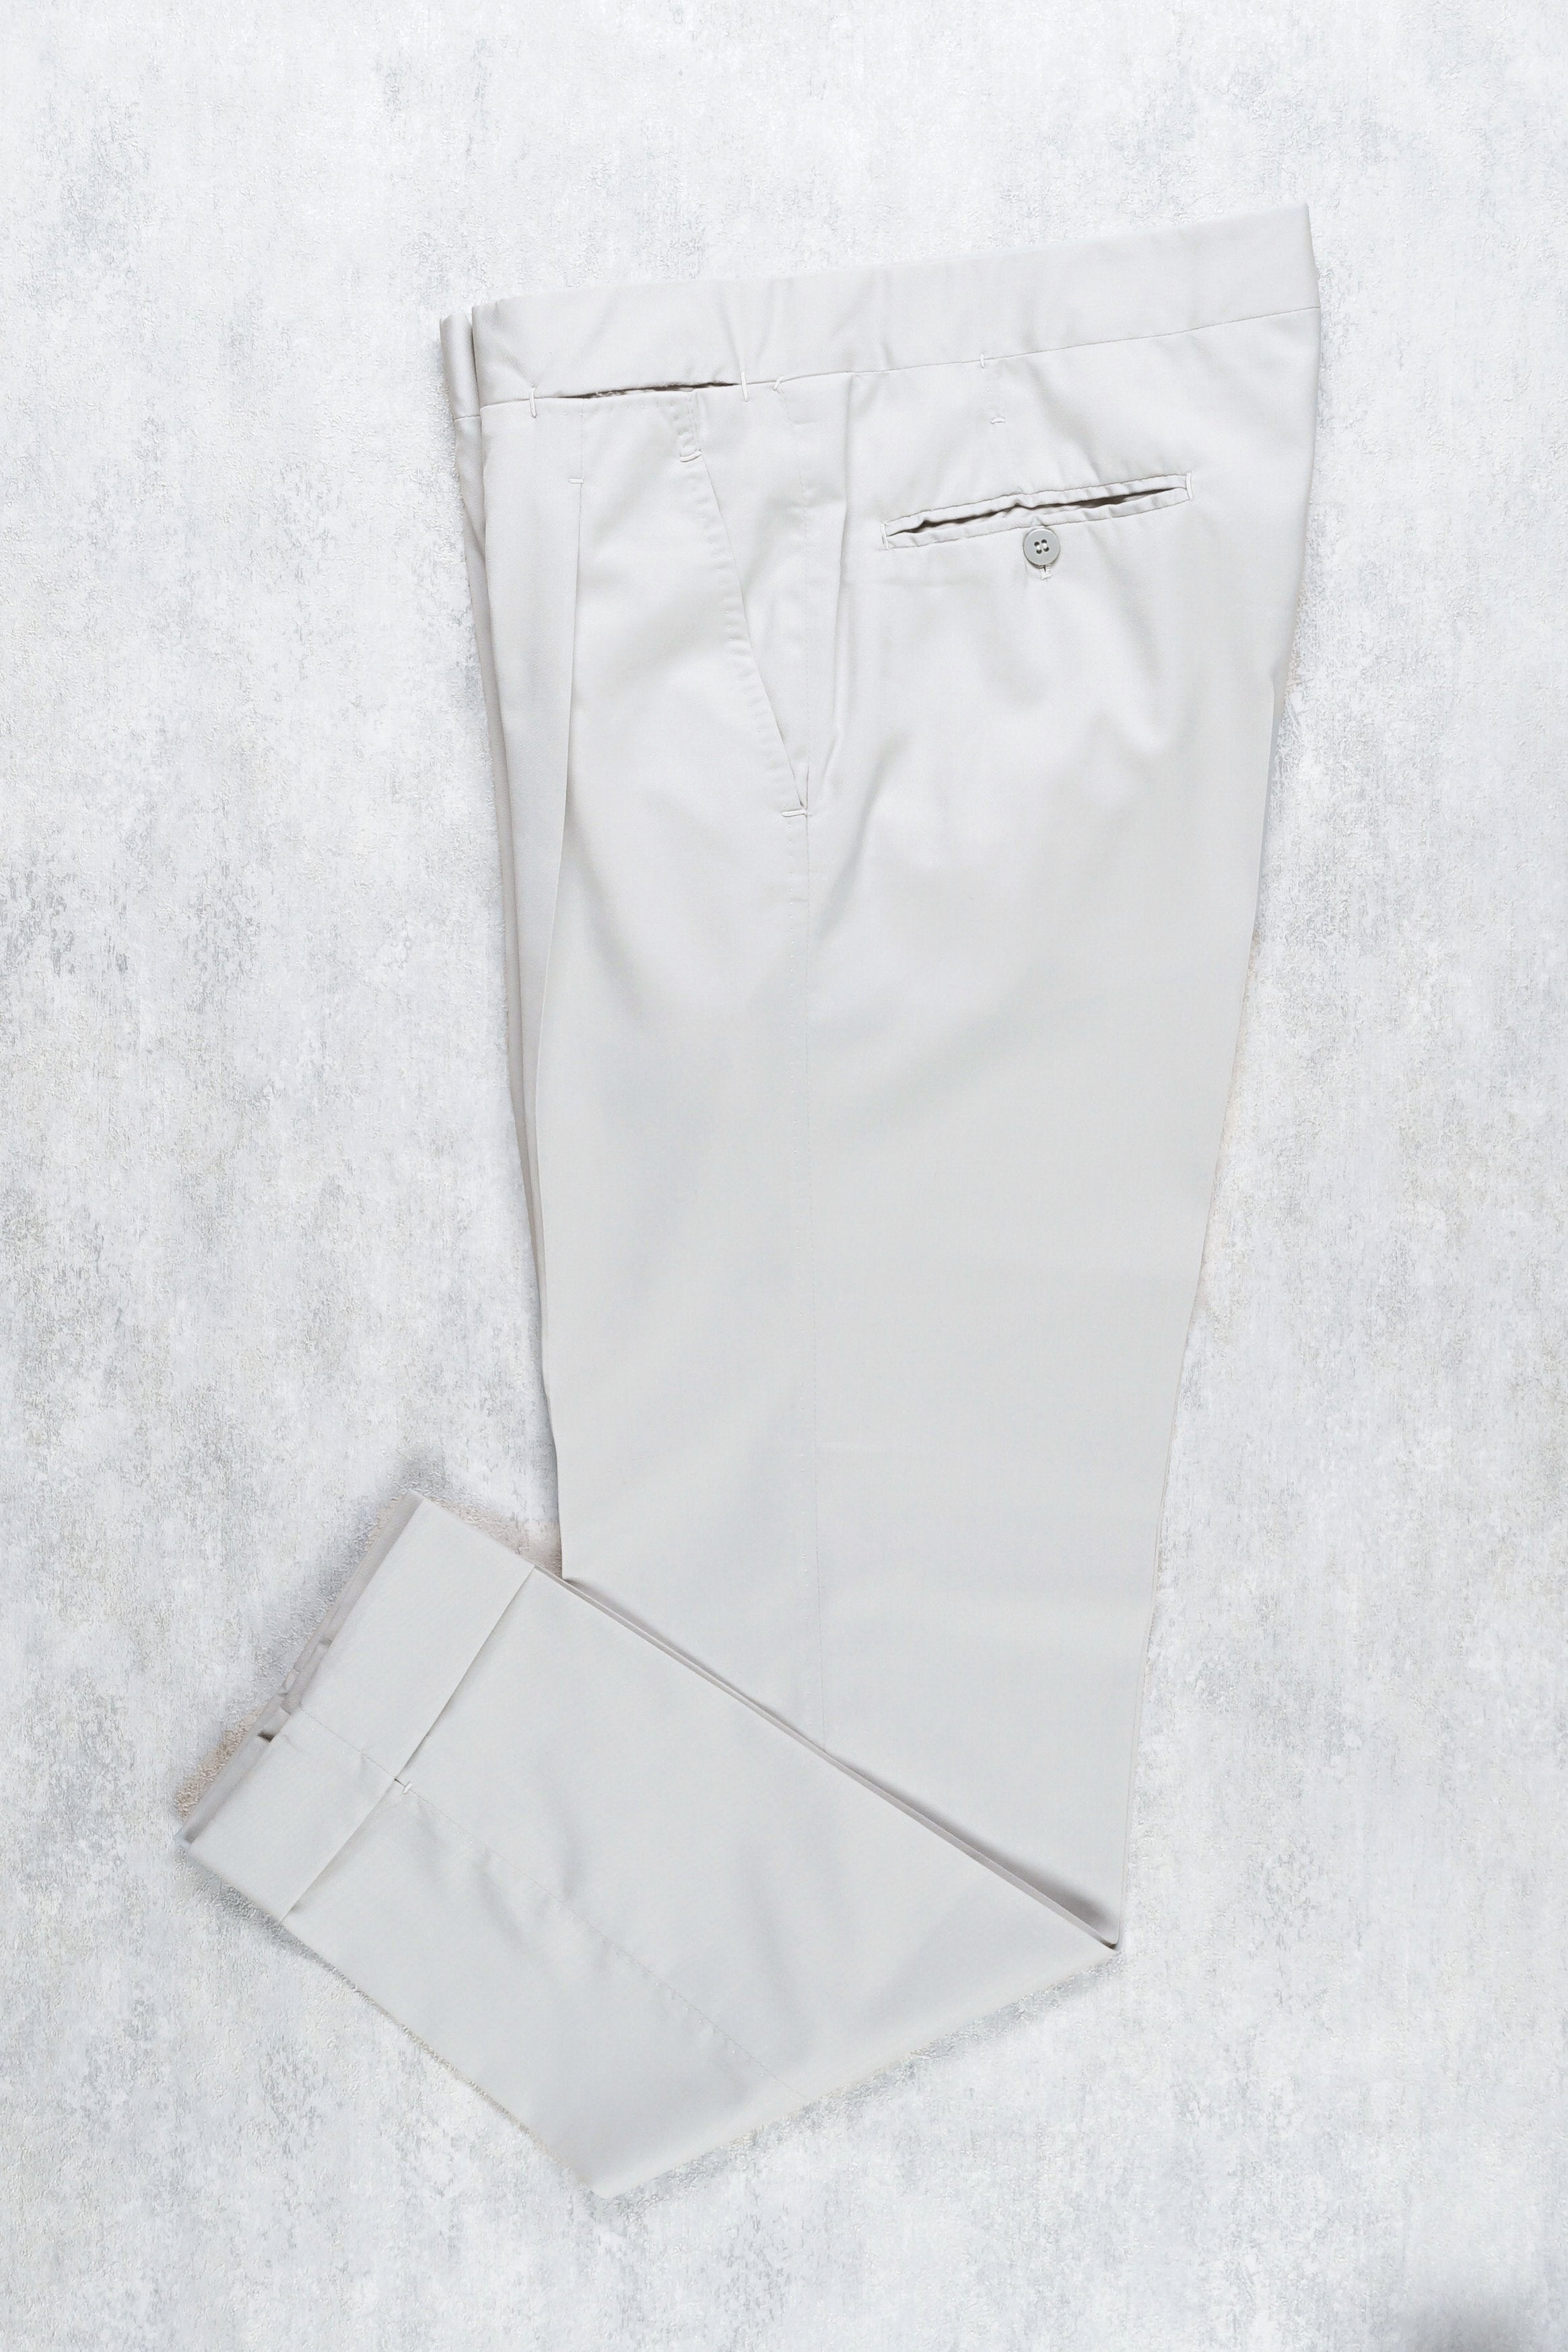 Ambrosi Napoli Grey Wool Single Pleat Trousers